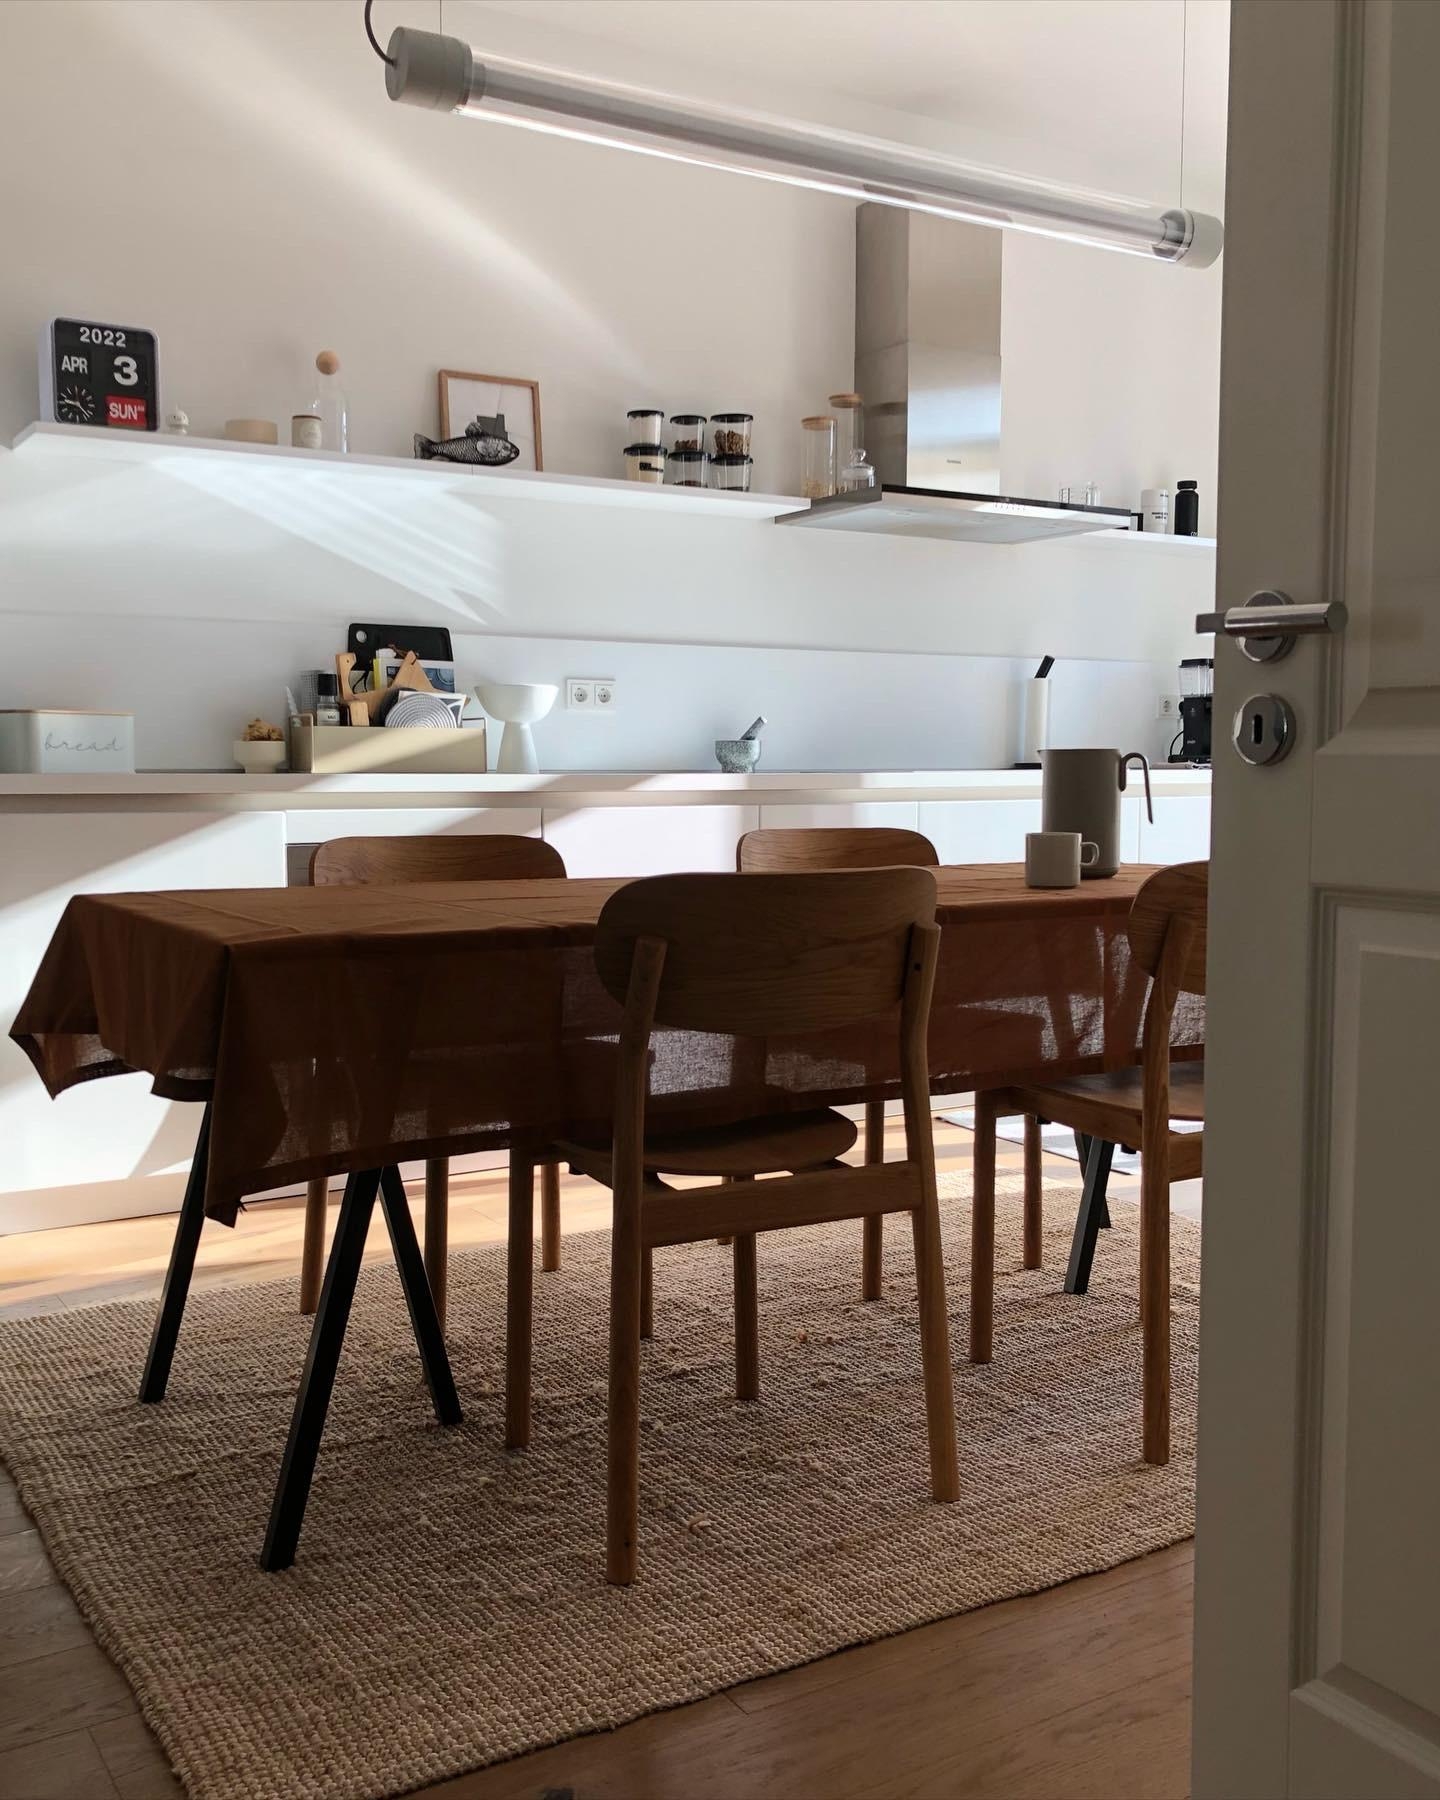 #küche #kitchen #nordicliving #skandi #scandi #skandinavisch #deko #dekoidee #regal #shelf #couchstyle #interior #home